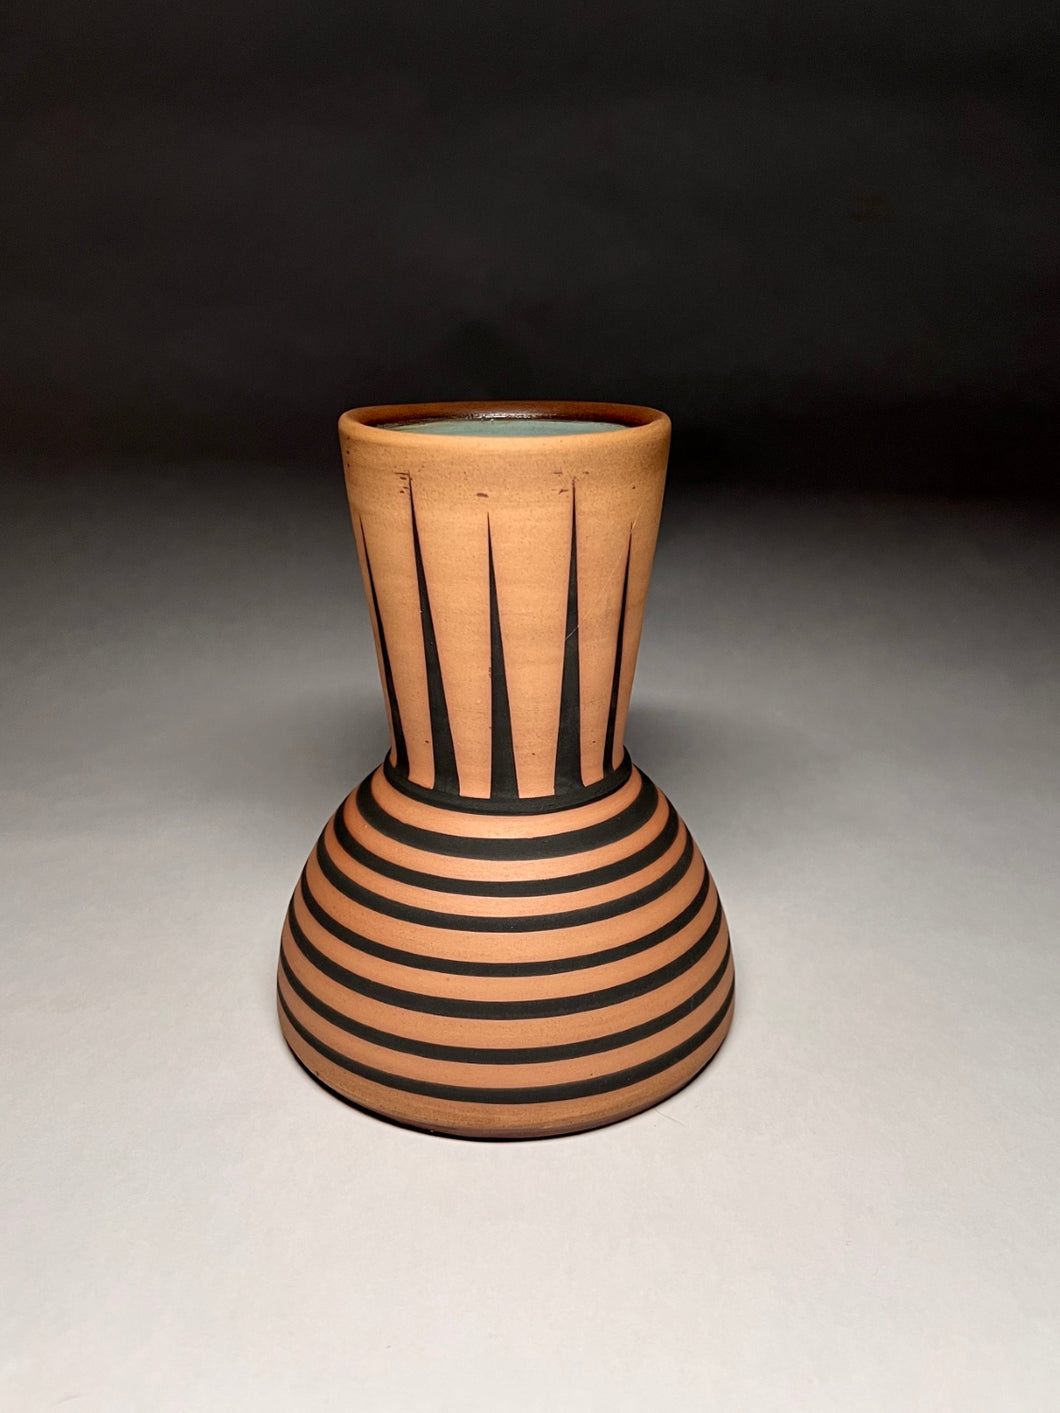 Patty Bilbro, “Spike Vase”, #3